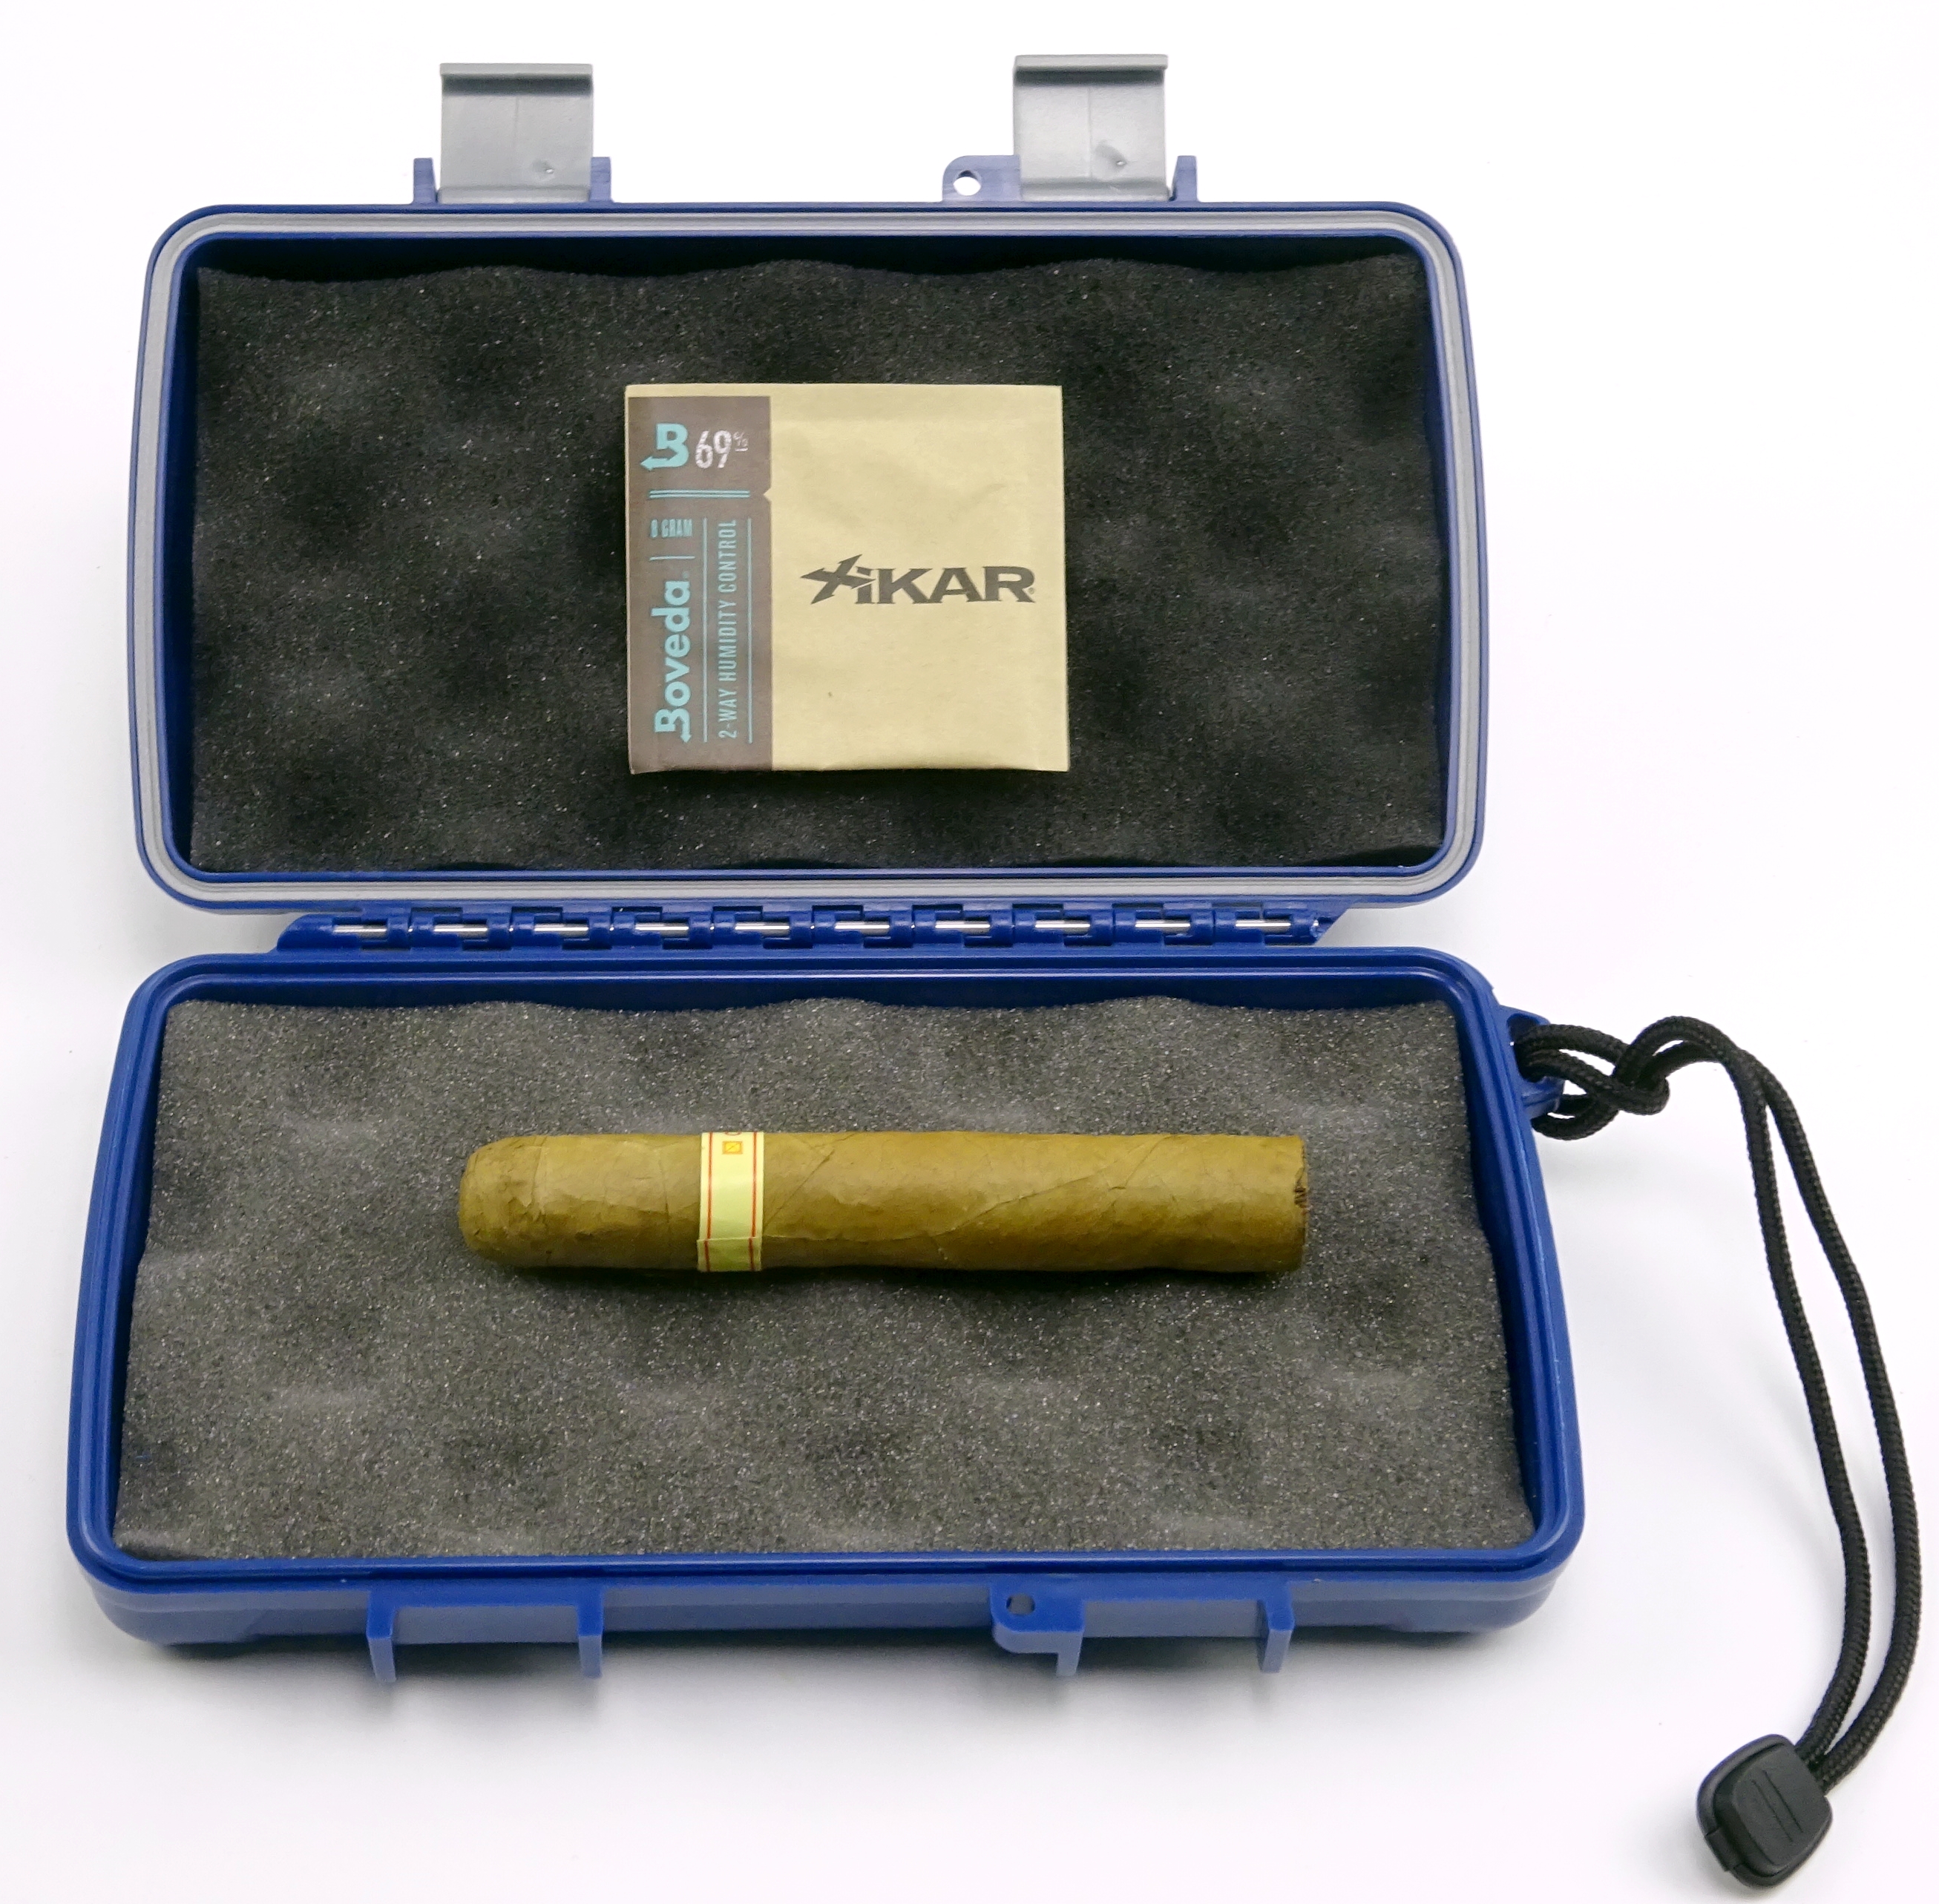 Reisehumidor Xikar 1210xi ABS schwarz 10 Zigarren mit Xikar-Boveda-Befeuchter